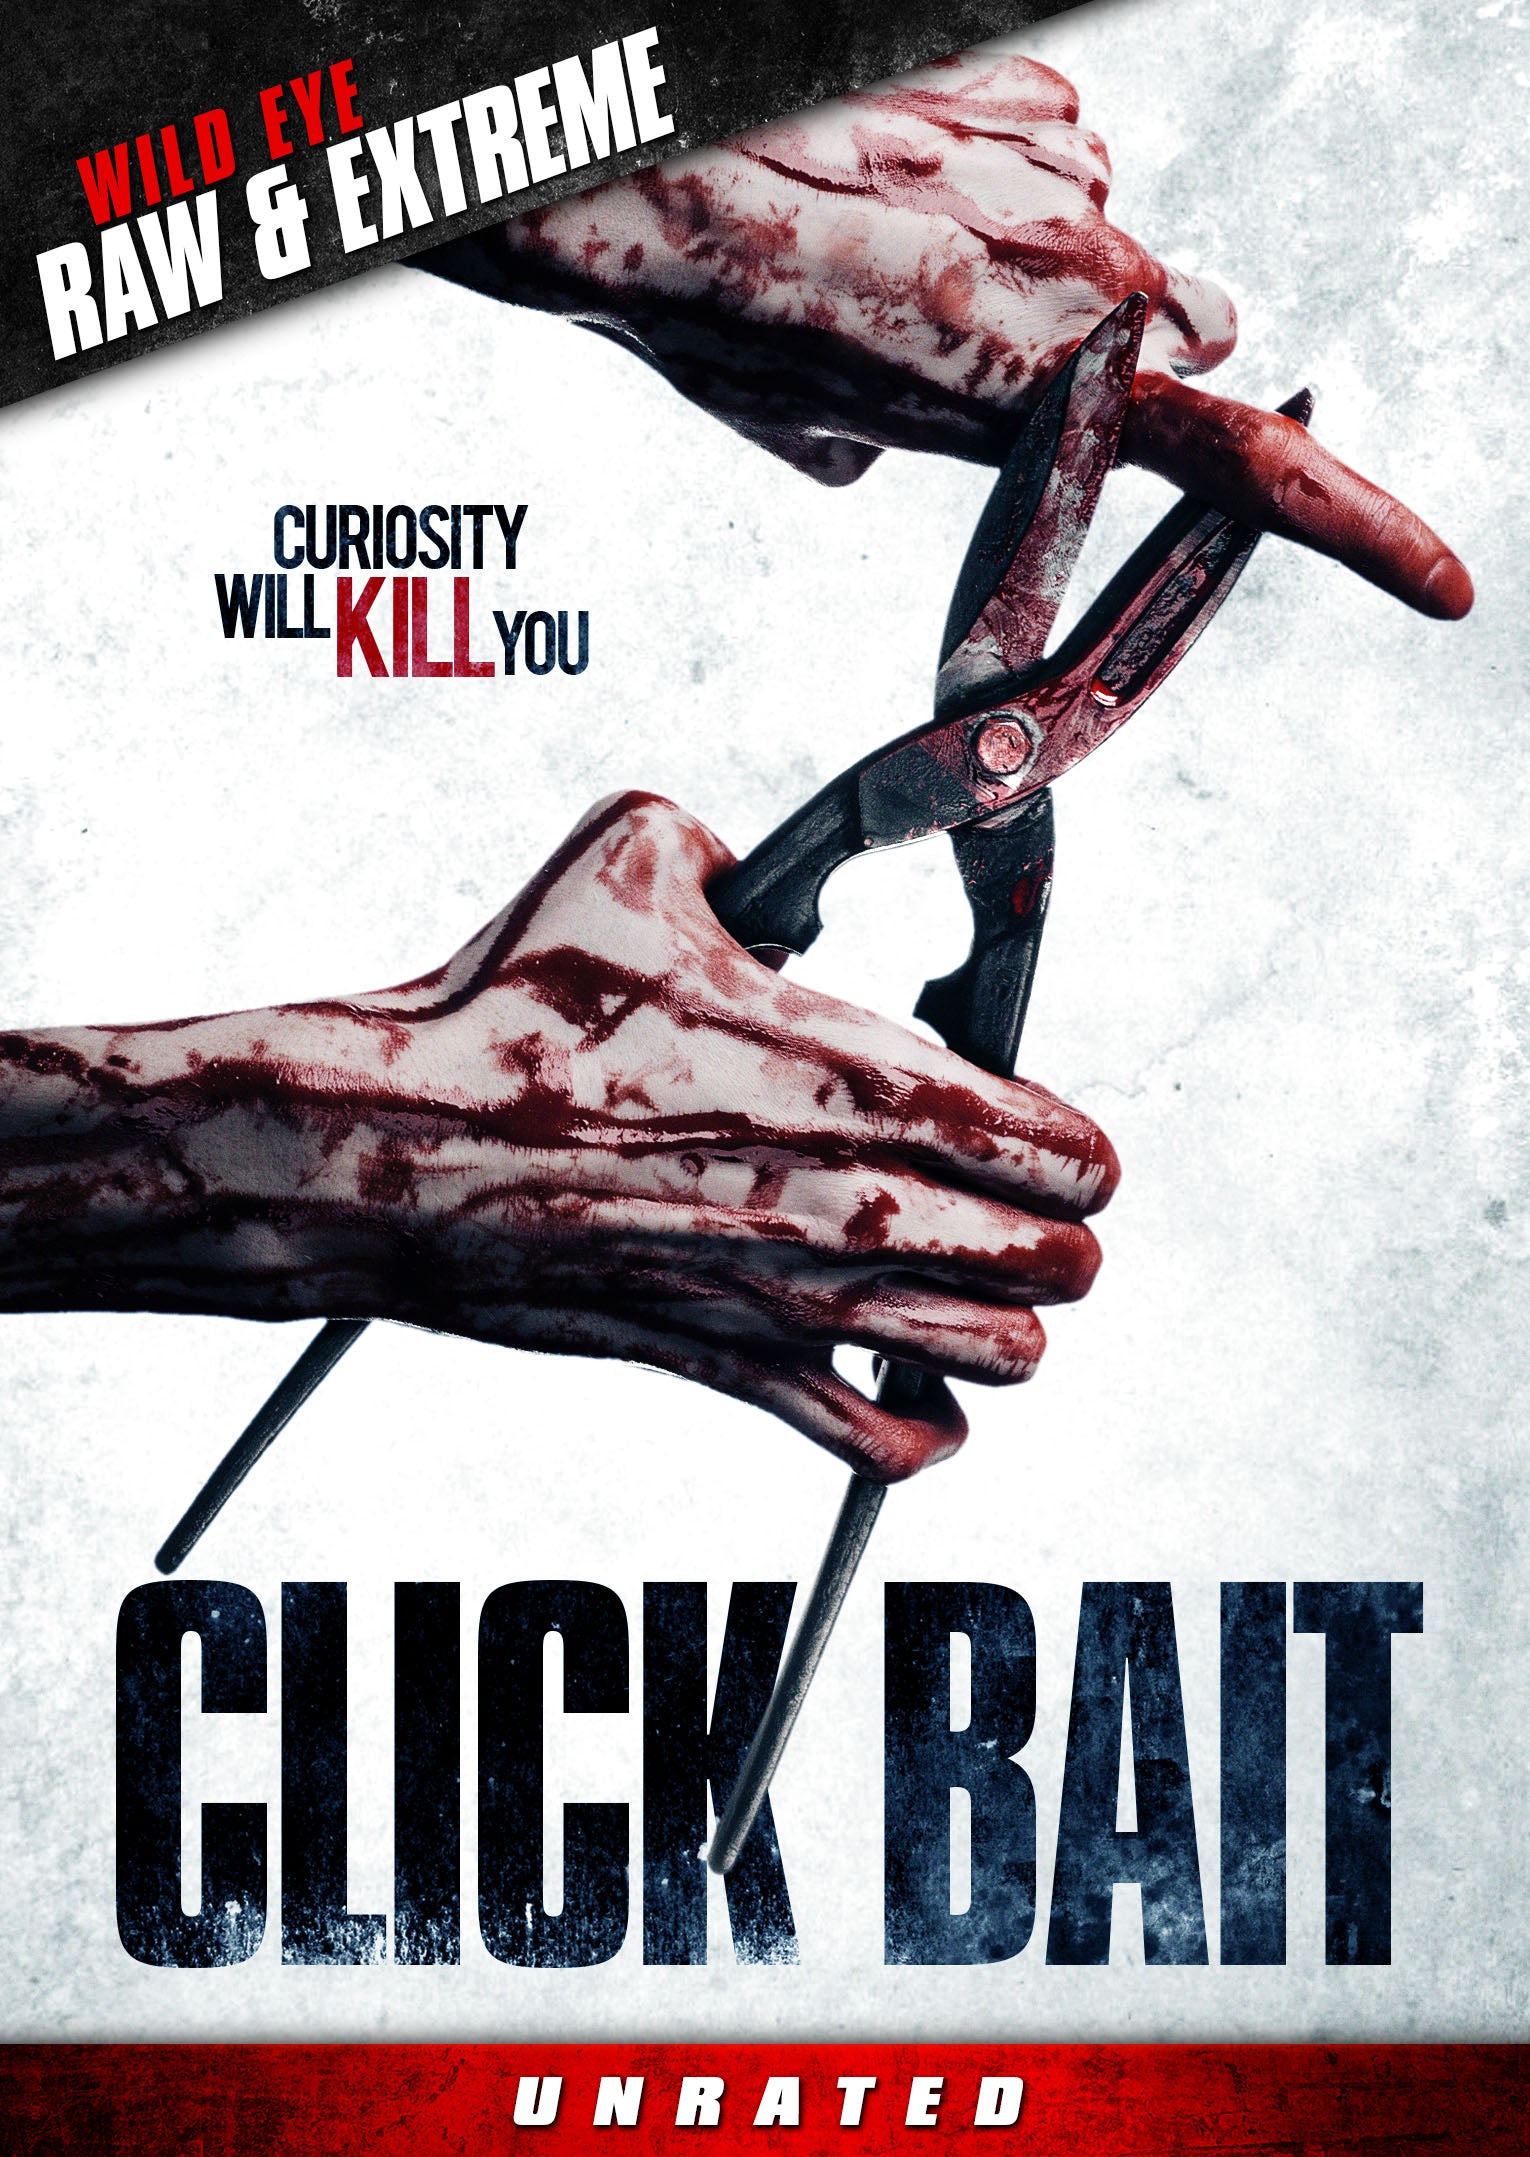 CLICK BAIT DVD